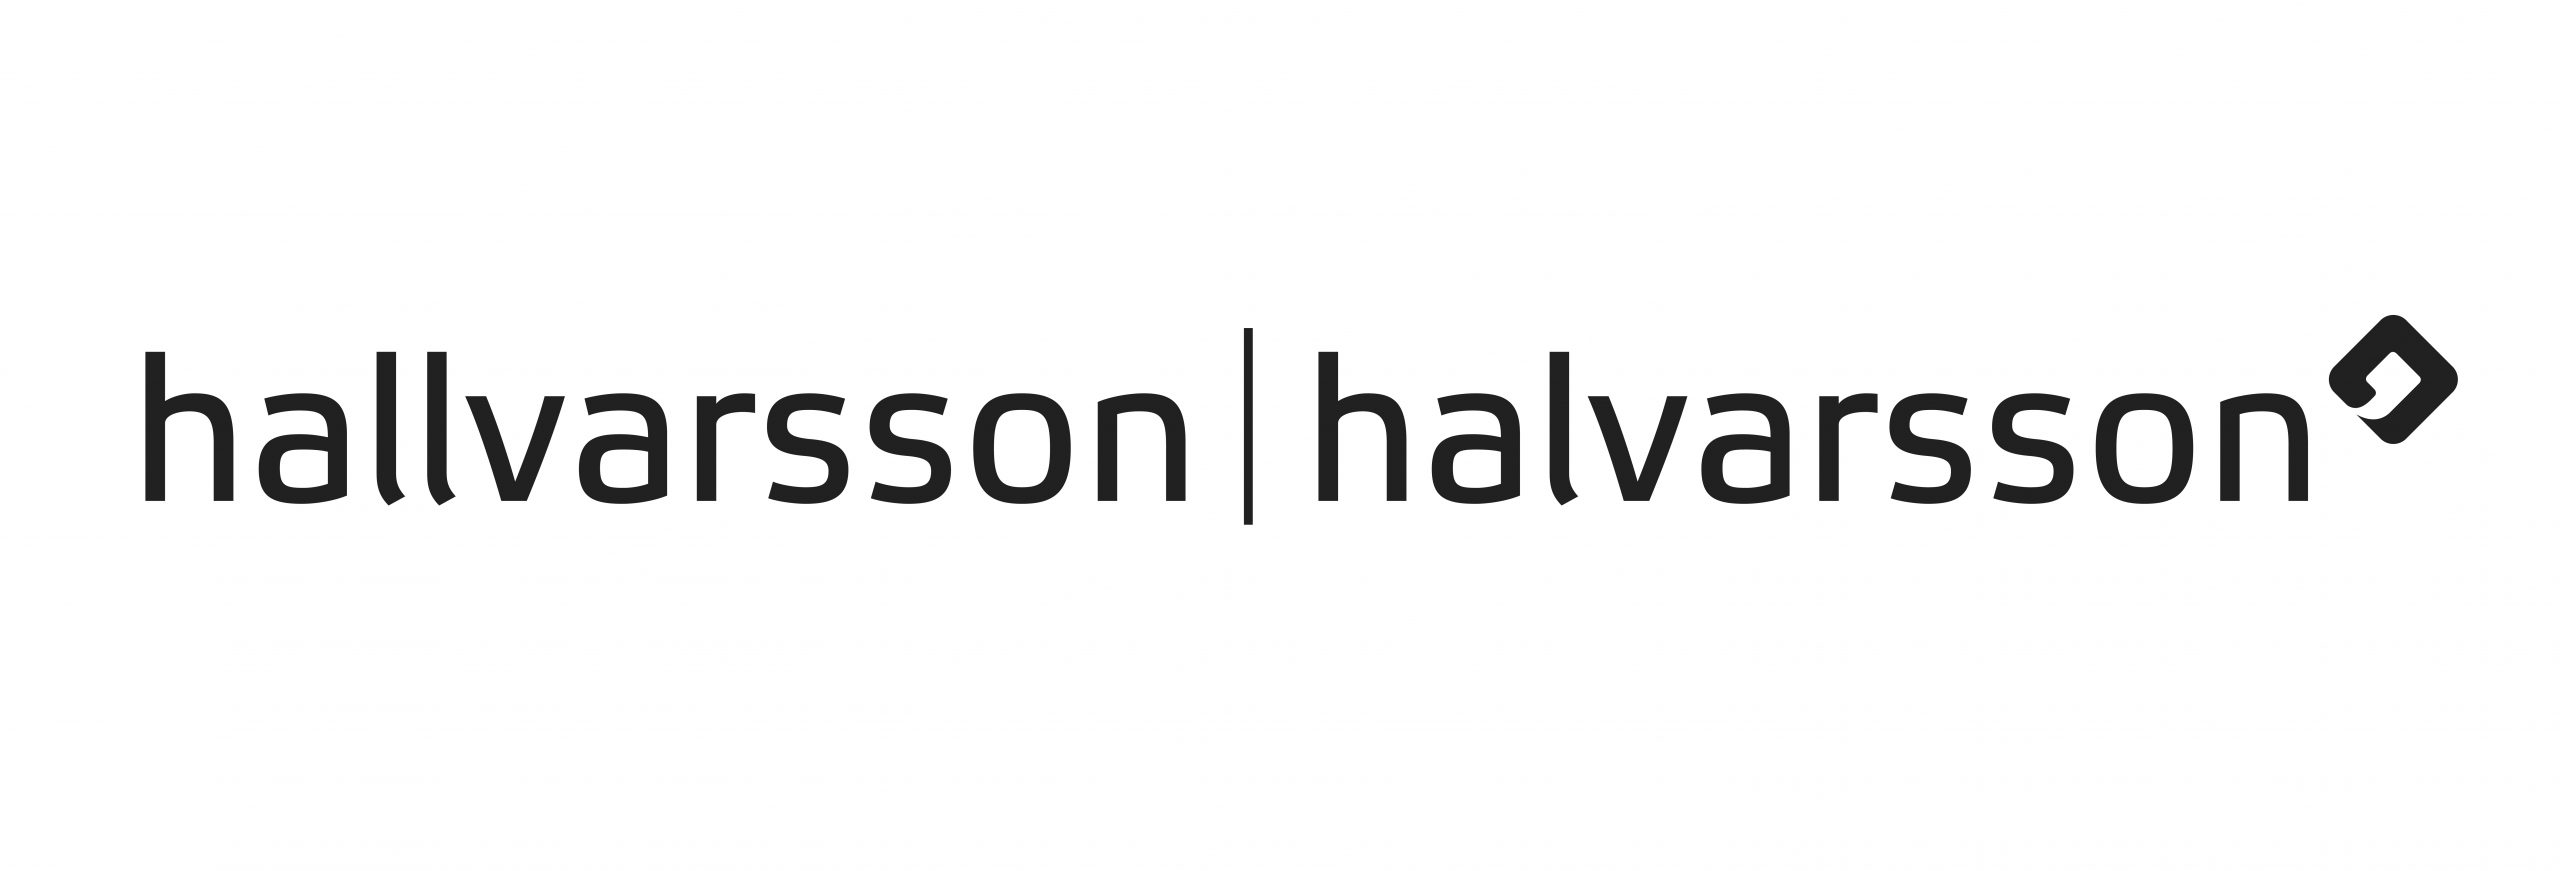 Hallvarsson & Halvarsson